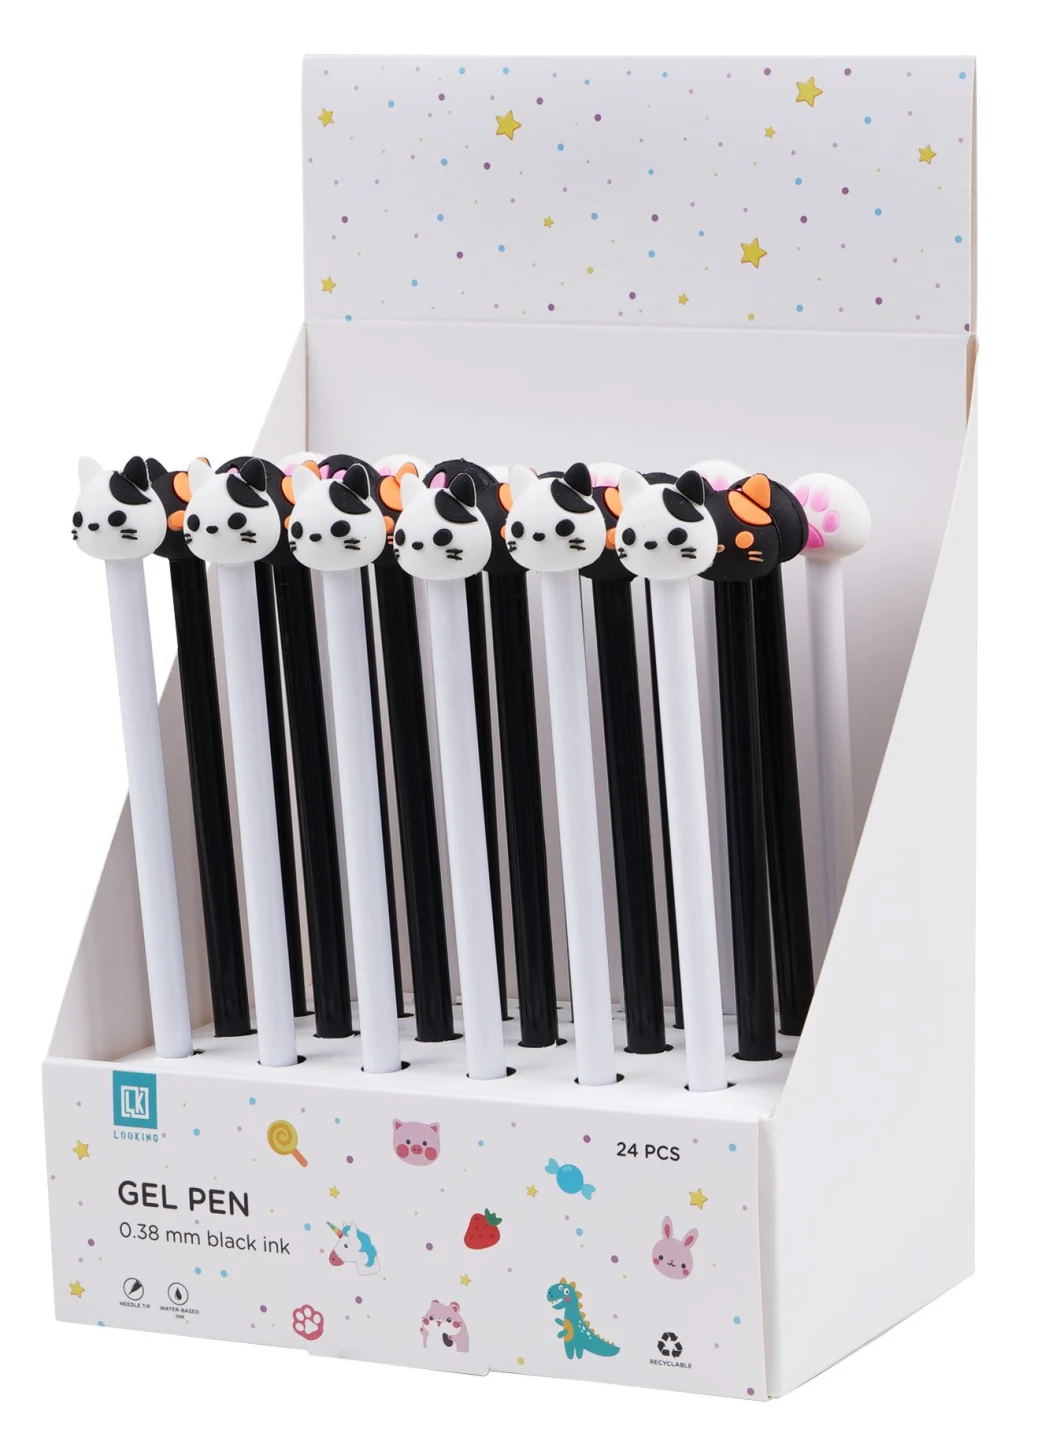 Super Value 2020 Series-Rollerball Pen with Cat Design